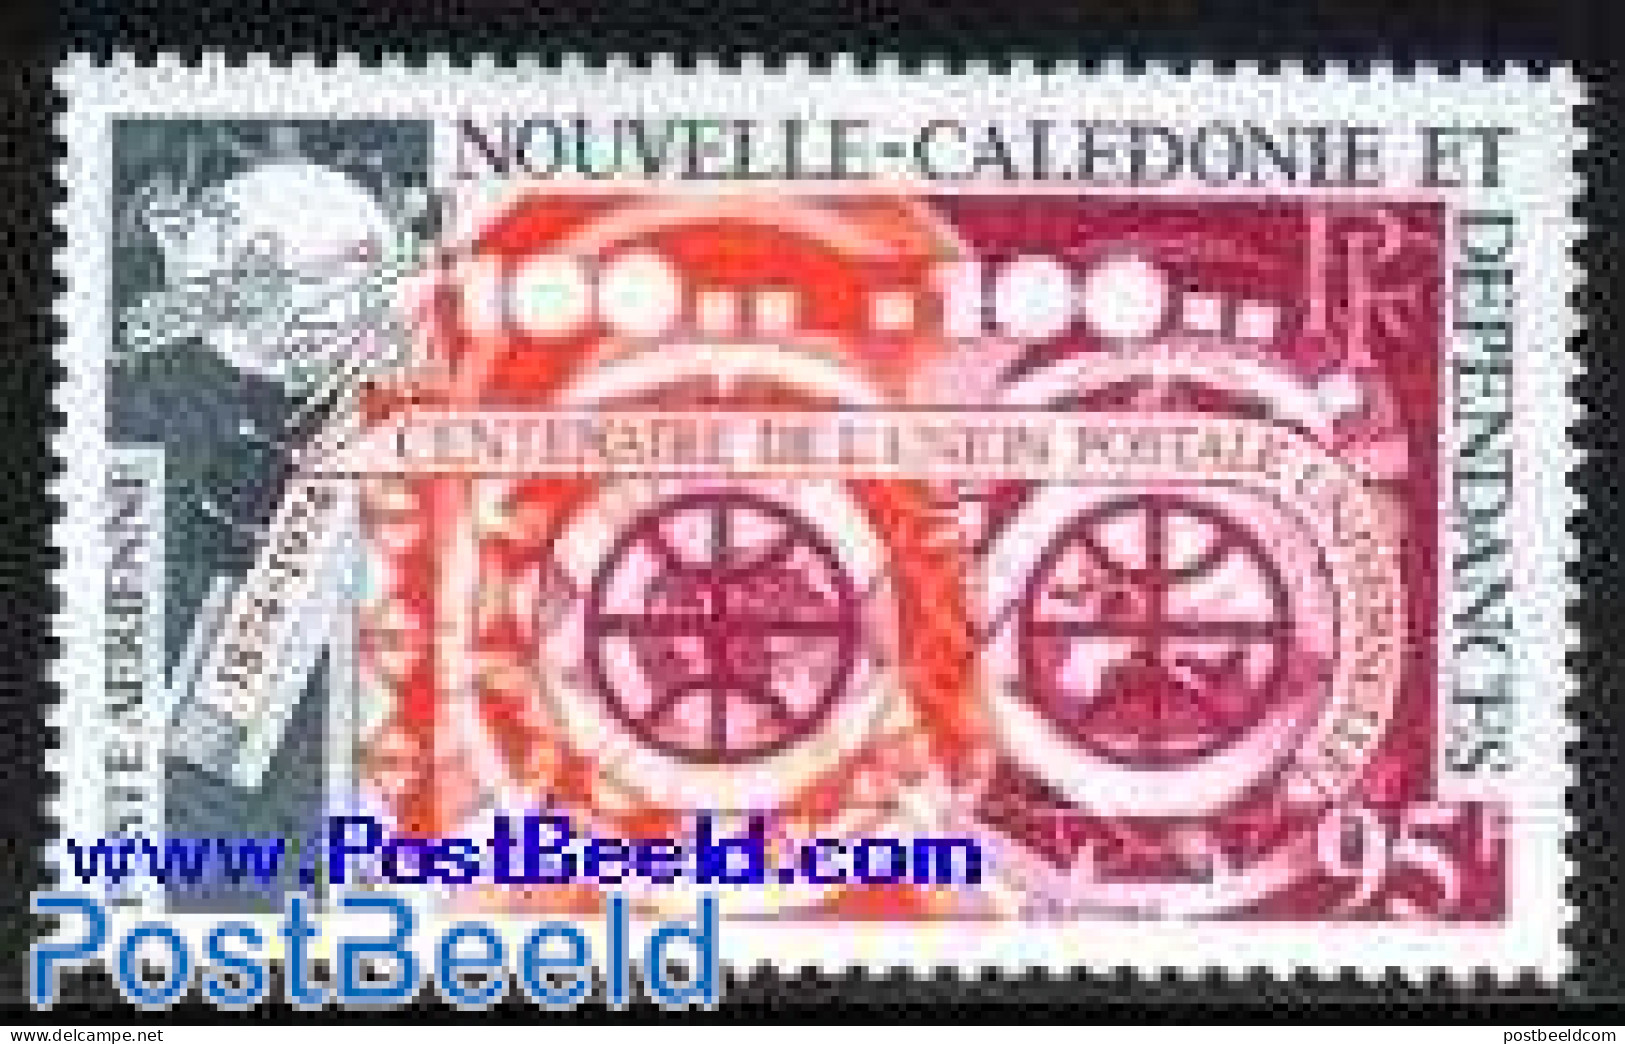 New Caledonia 1974 UPU Centenary 1v, Mint NH, U.P.U. - Ongebruikt